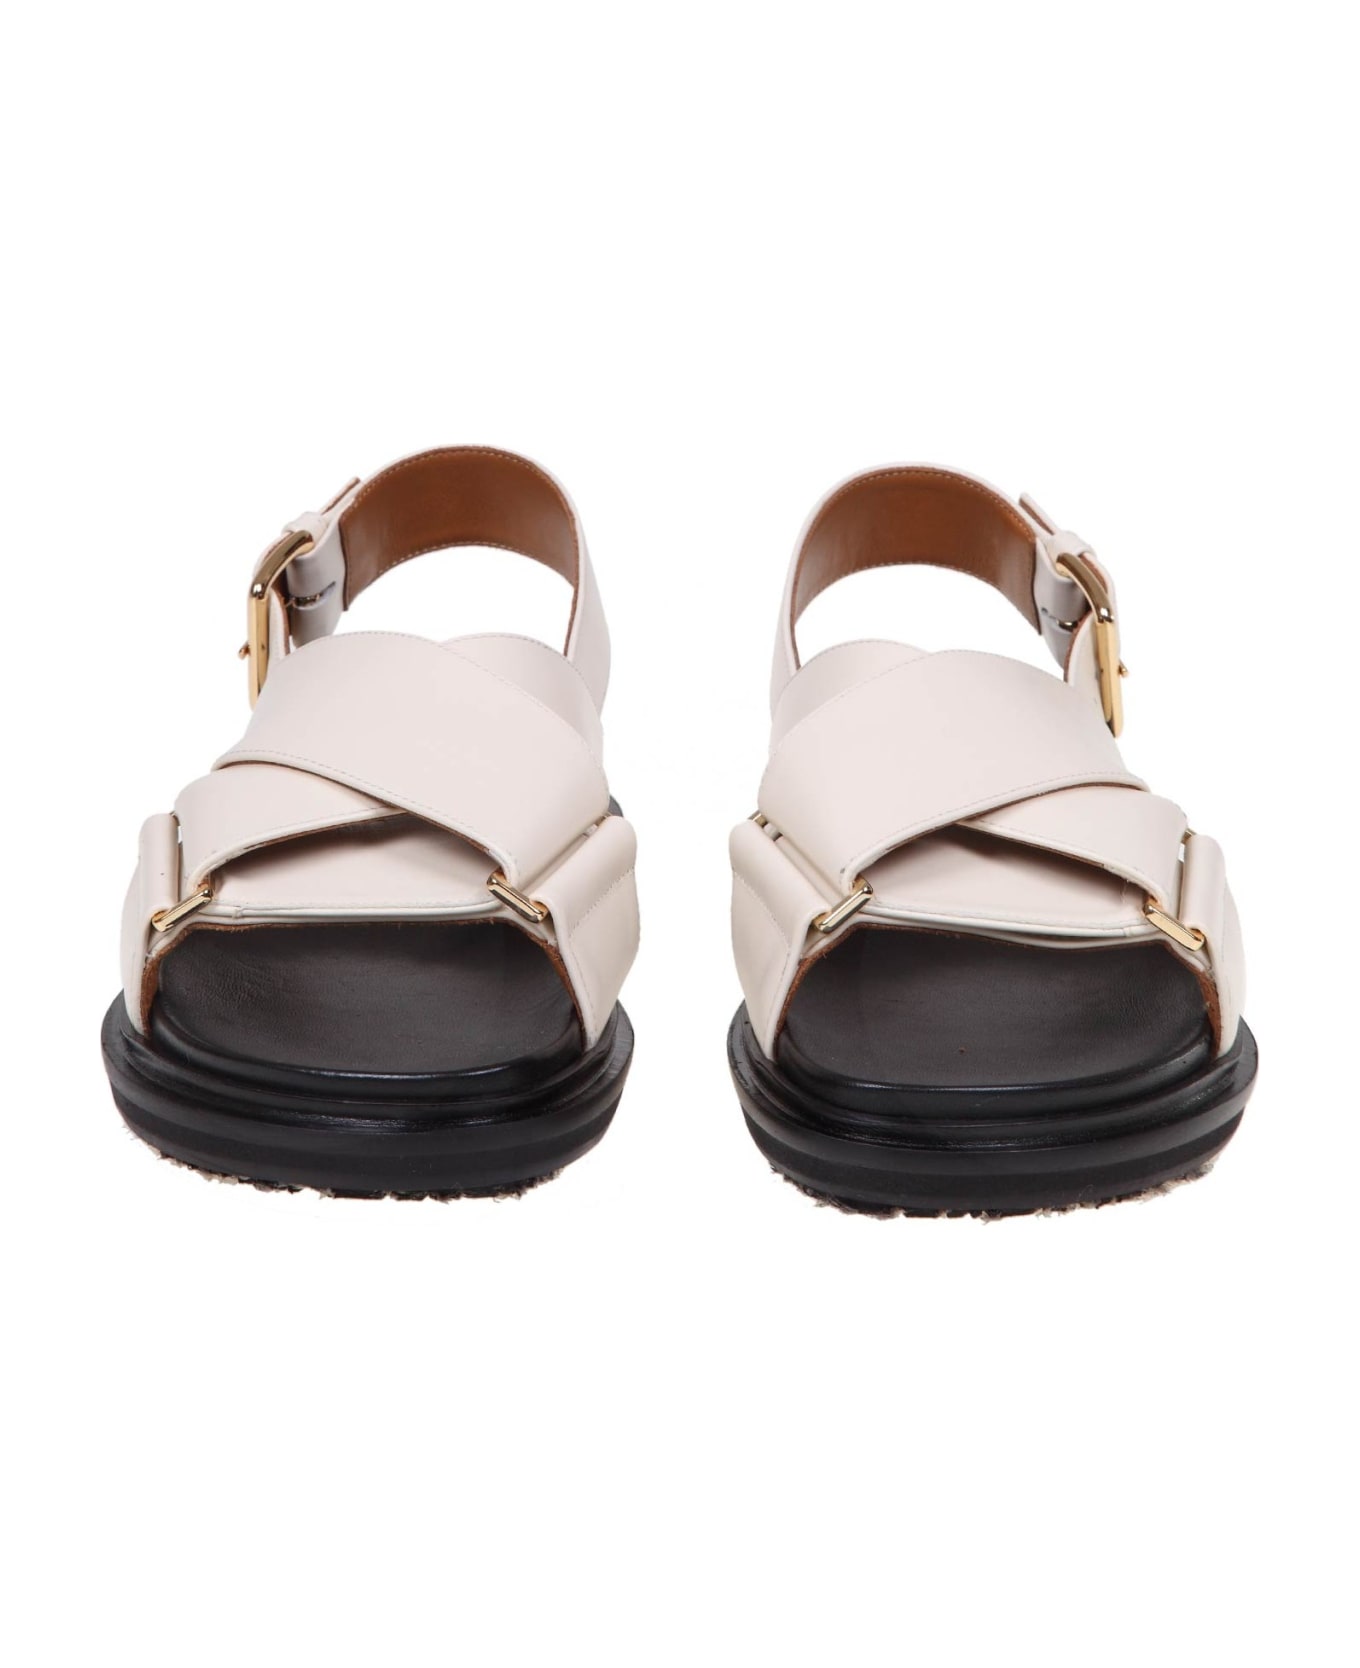 Marni Fussbett Sandal In White Leather - CREAM